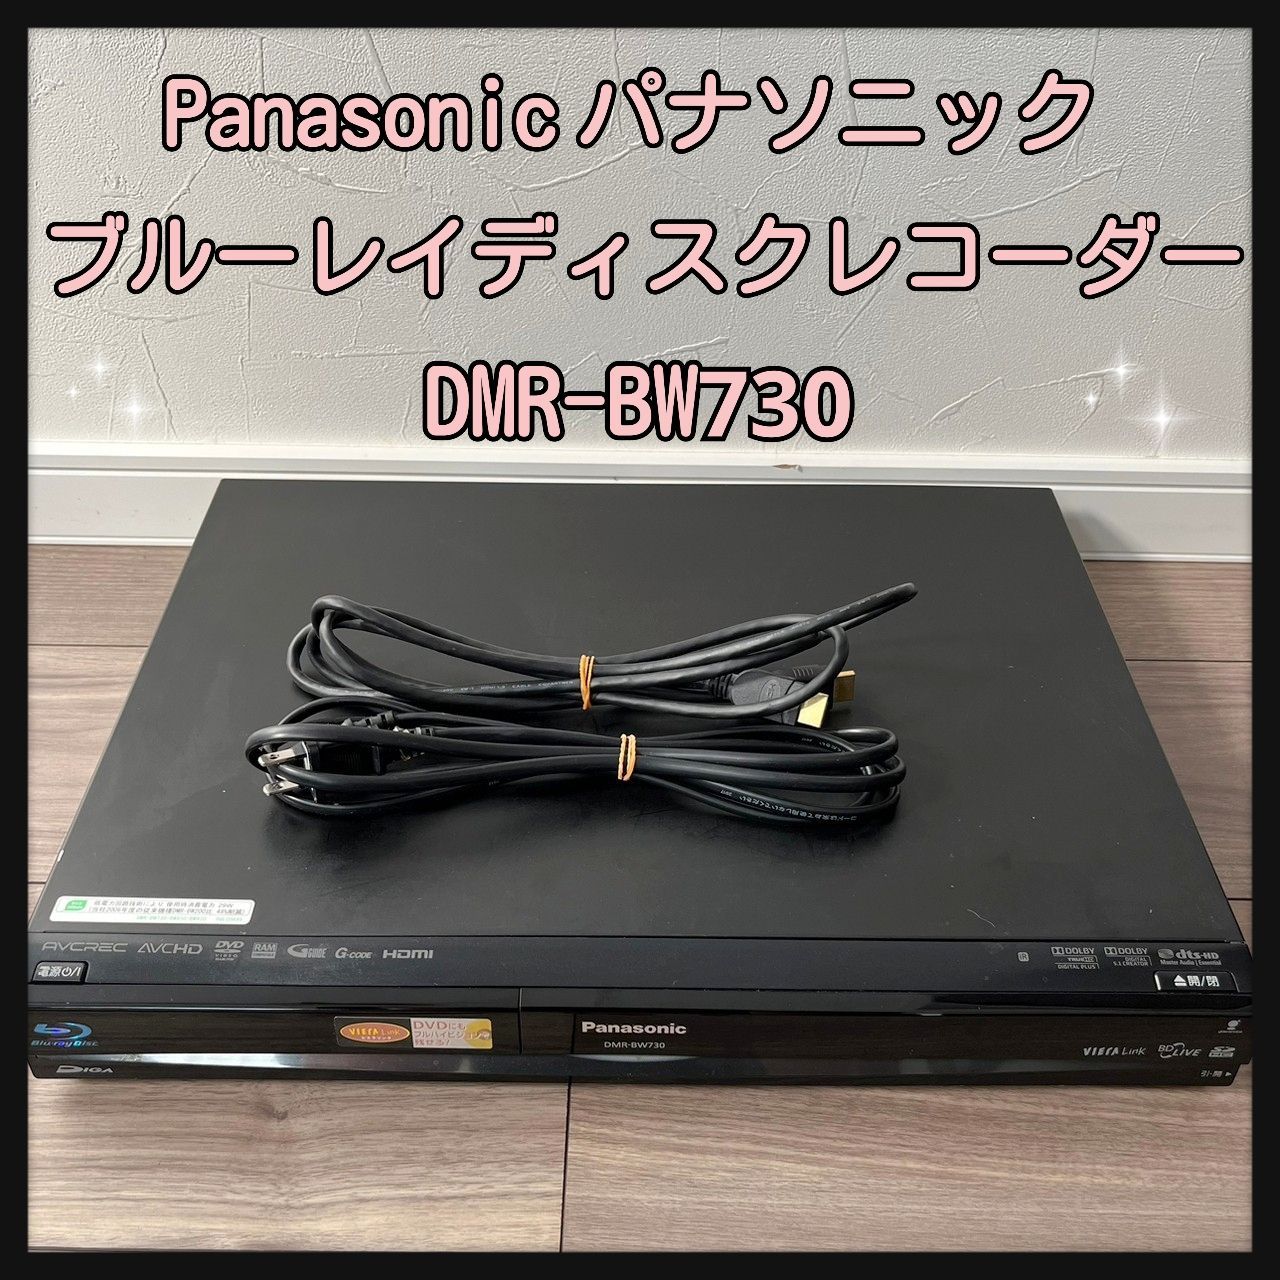 Panasonic製 ブルーレイレコーダー ディーガ DMR-BW730 - 映像 